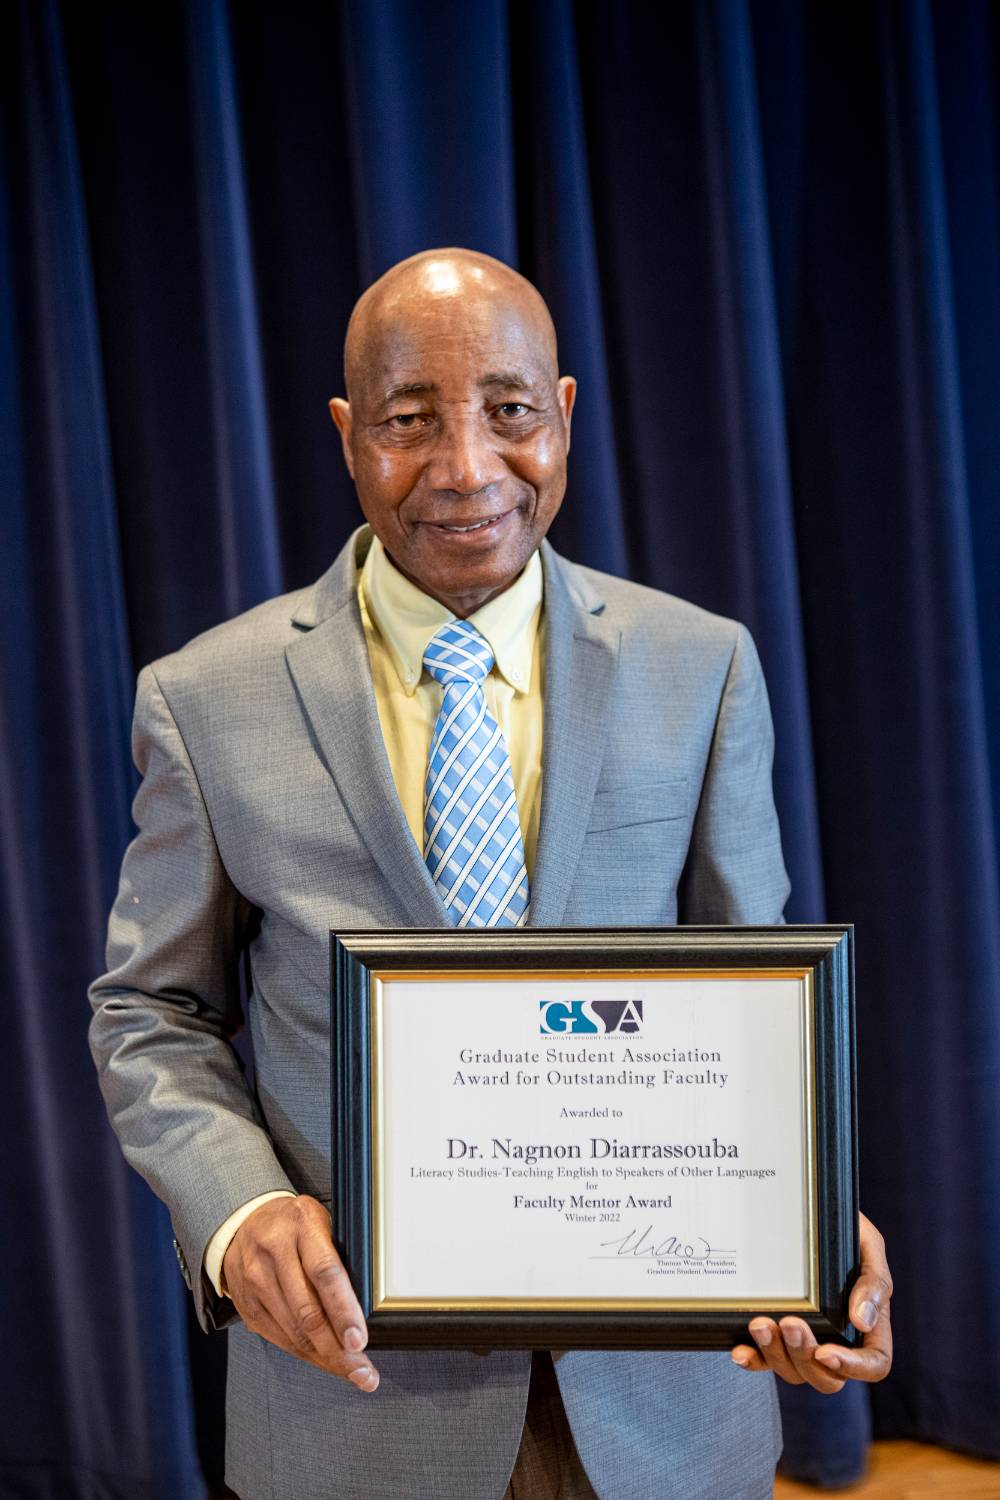 Dr. Nagnon Diarrassouba holding his certificate